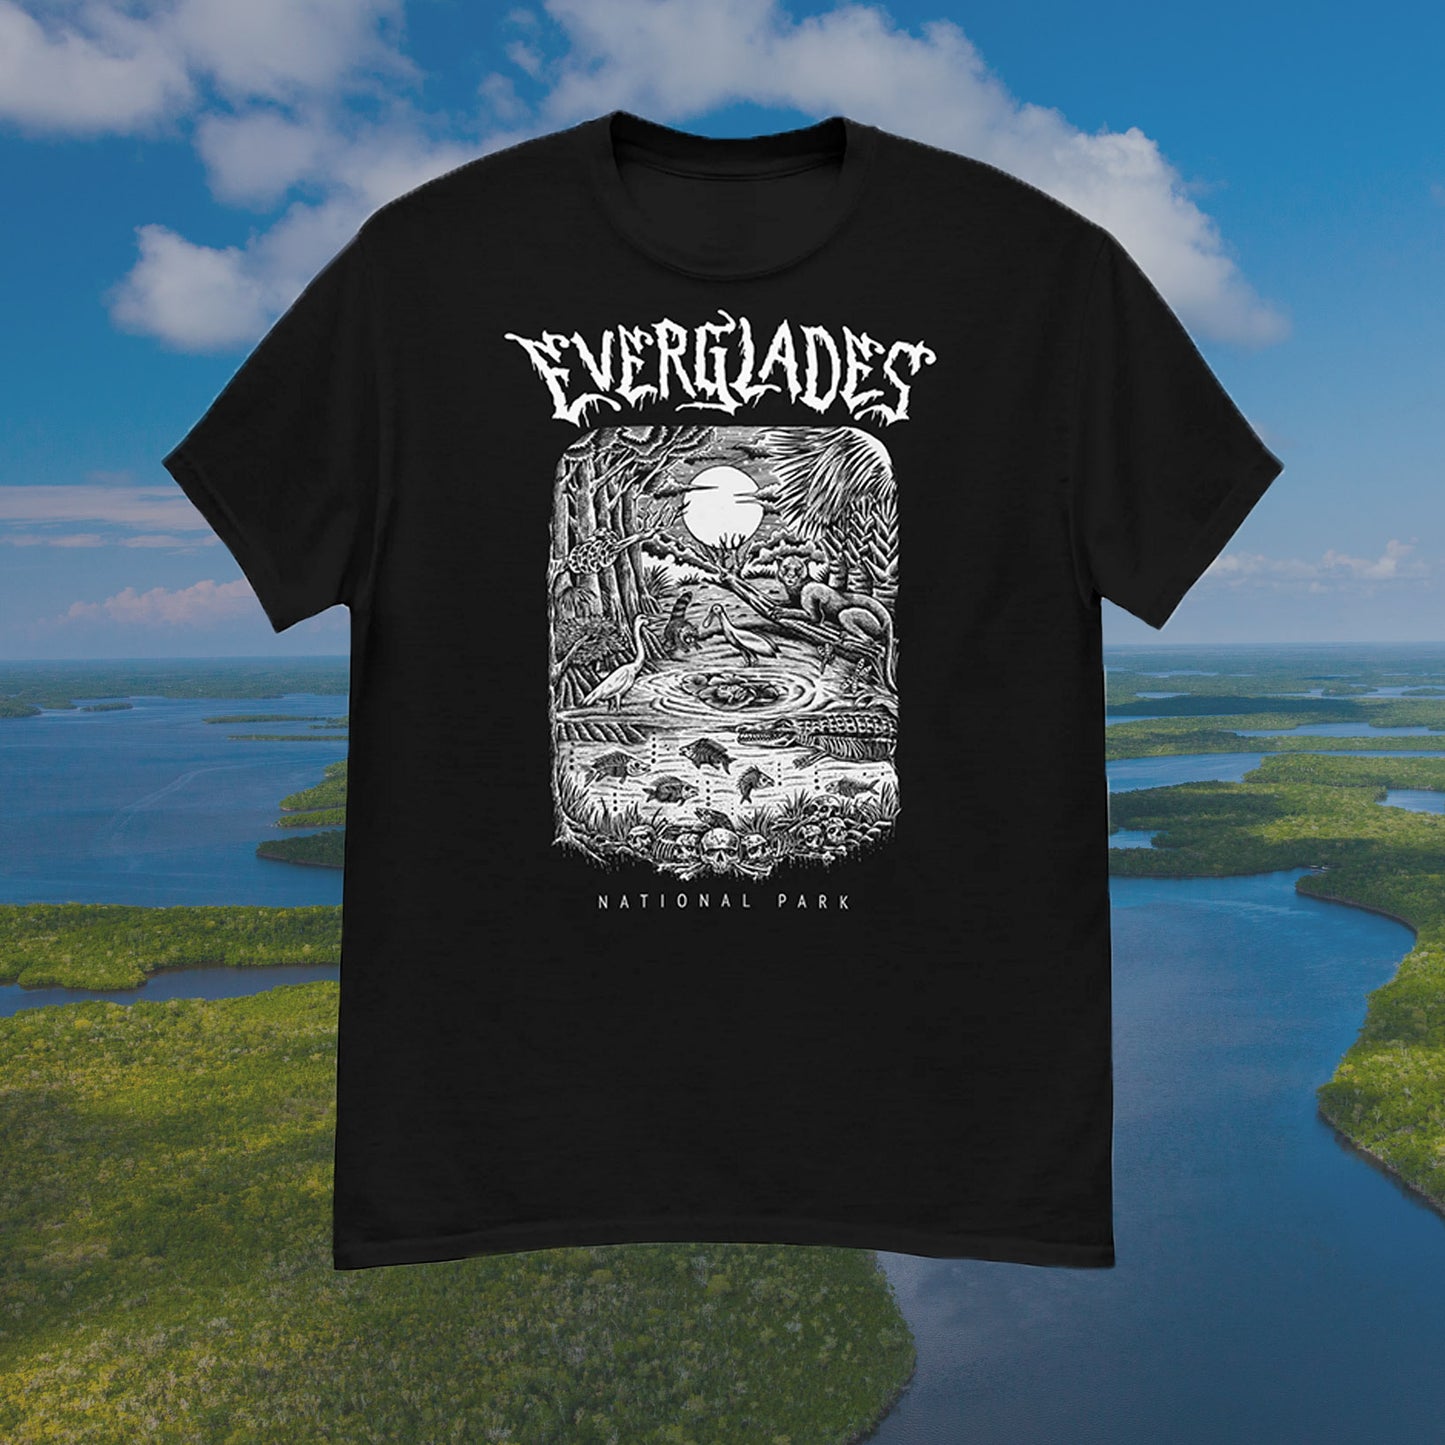 Everglades National Park Death Metal T-Shirt